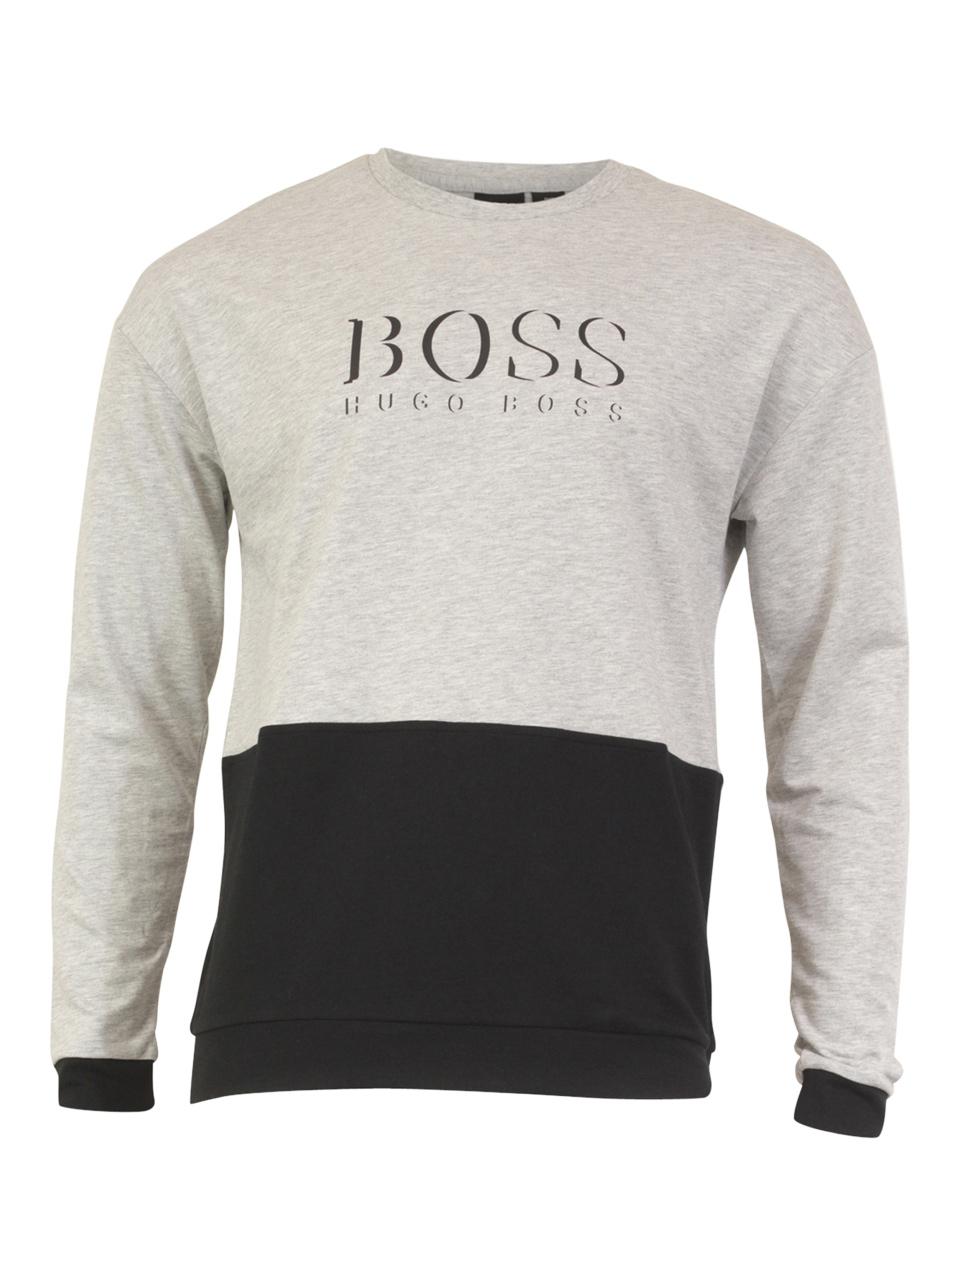 hugo boss long sleeve shirt sale